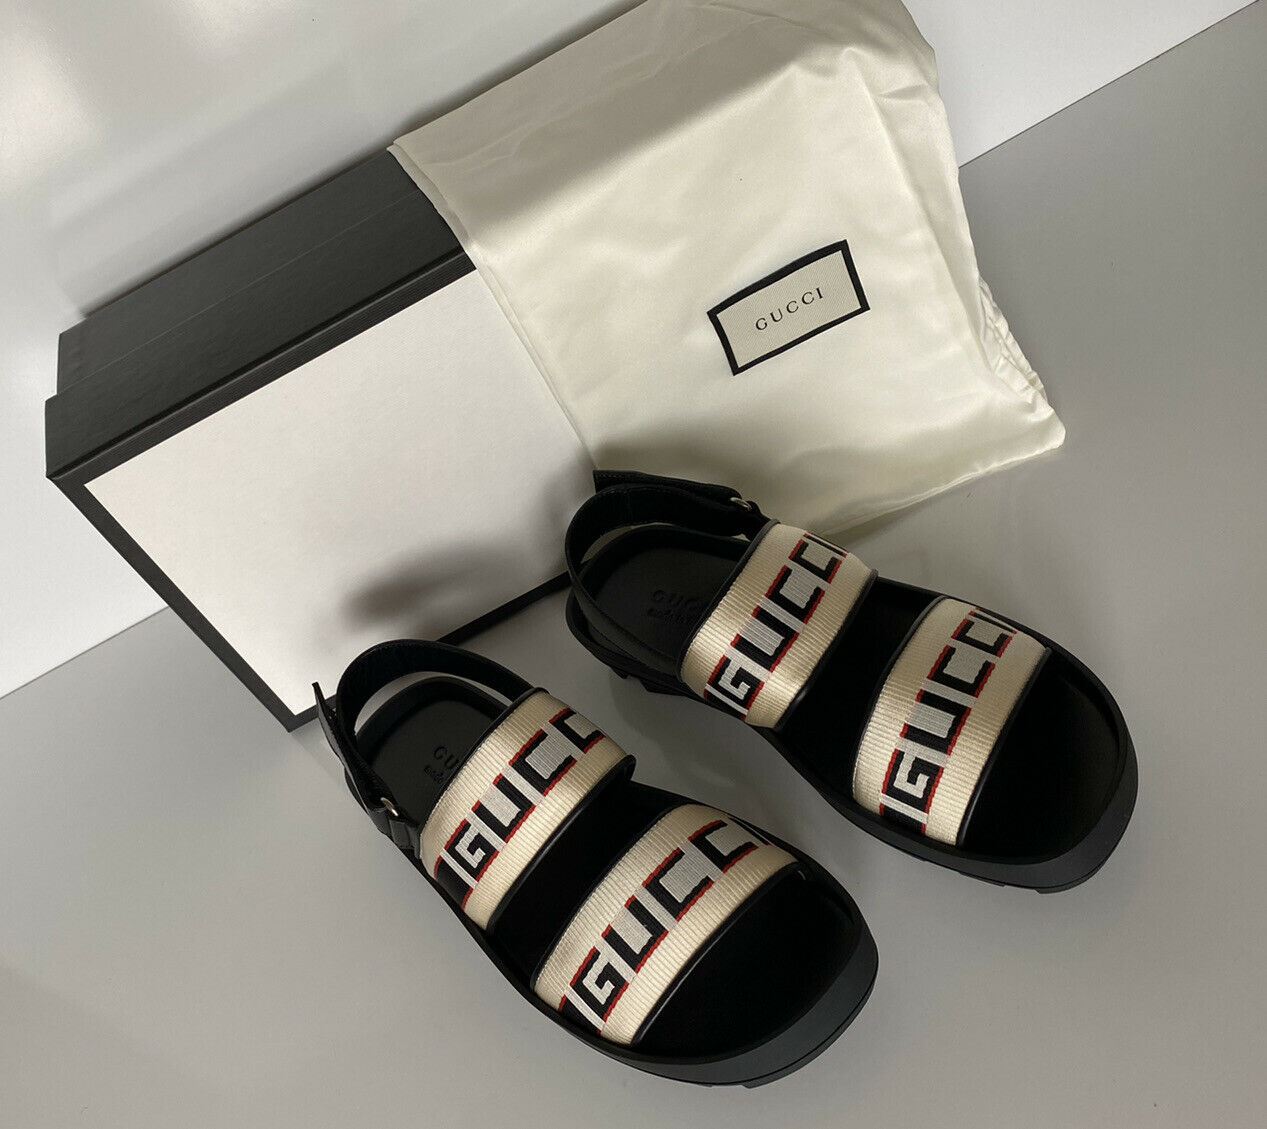 NIB Gucci Mens Black/White Canvas/Leather Sandals 10 US (Gucci 9.5) Italy 523769